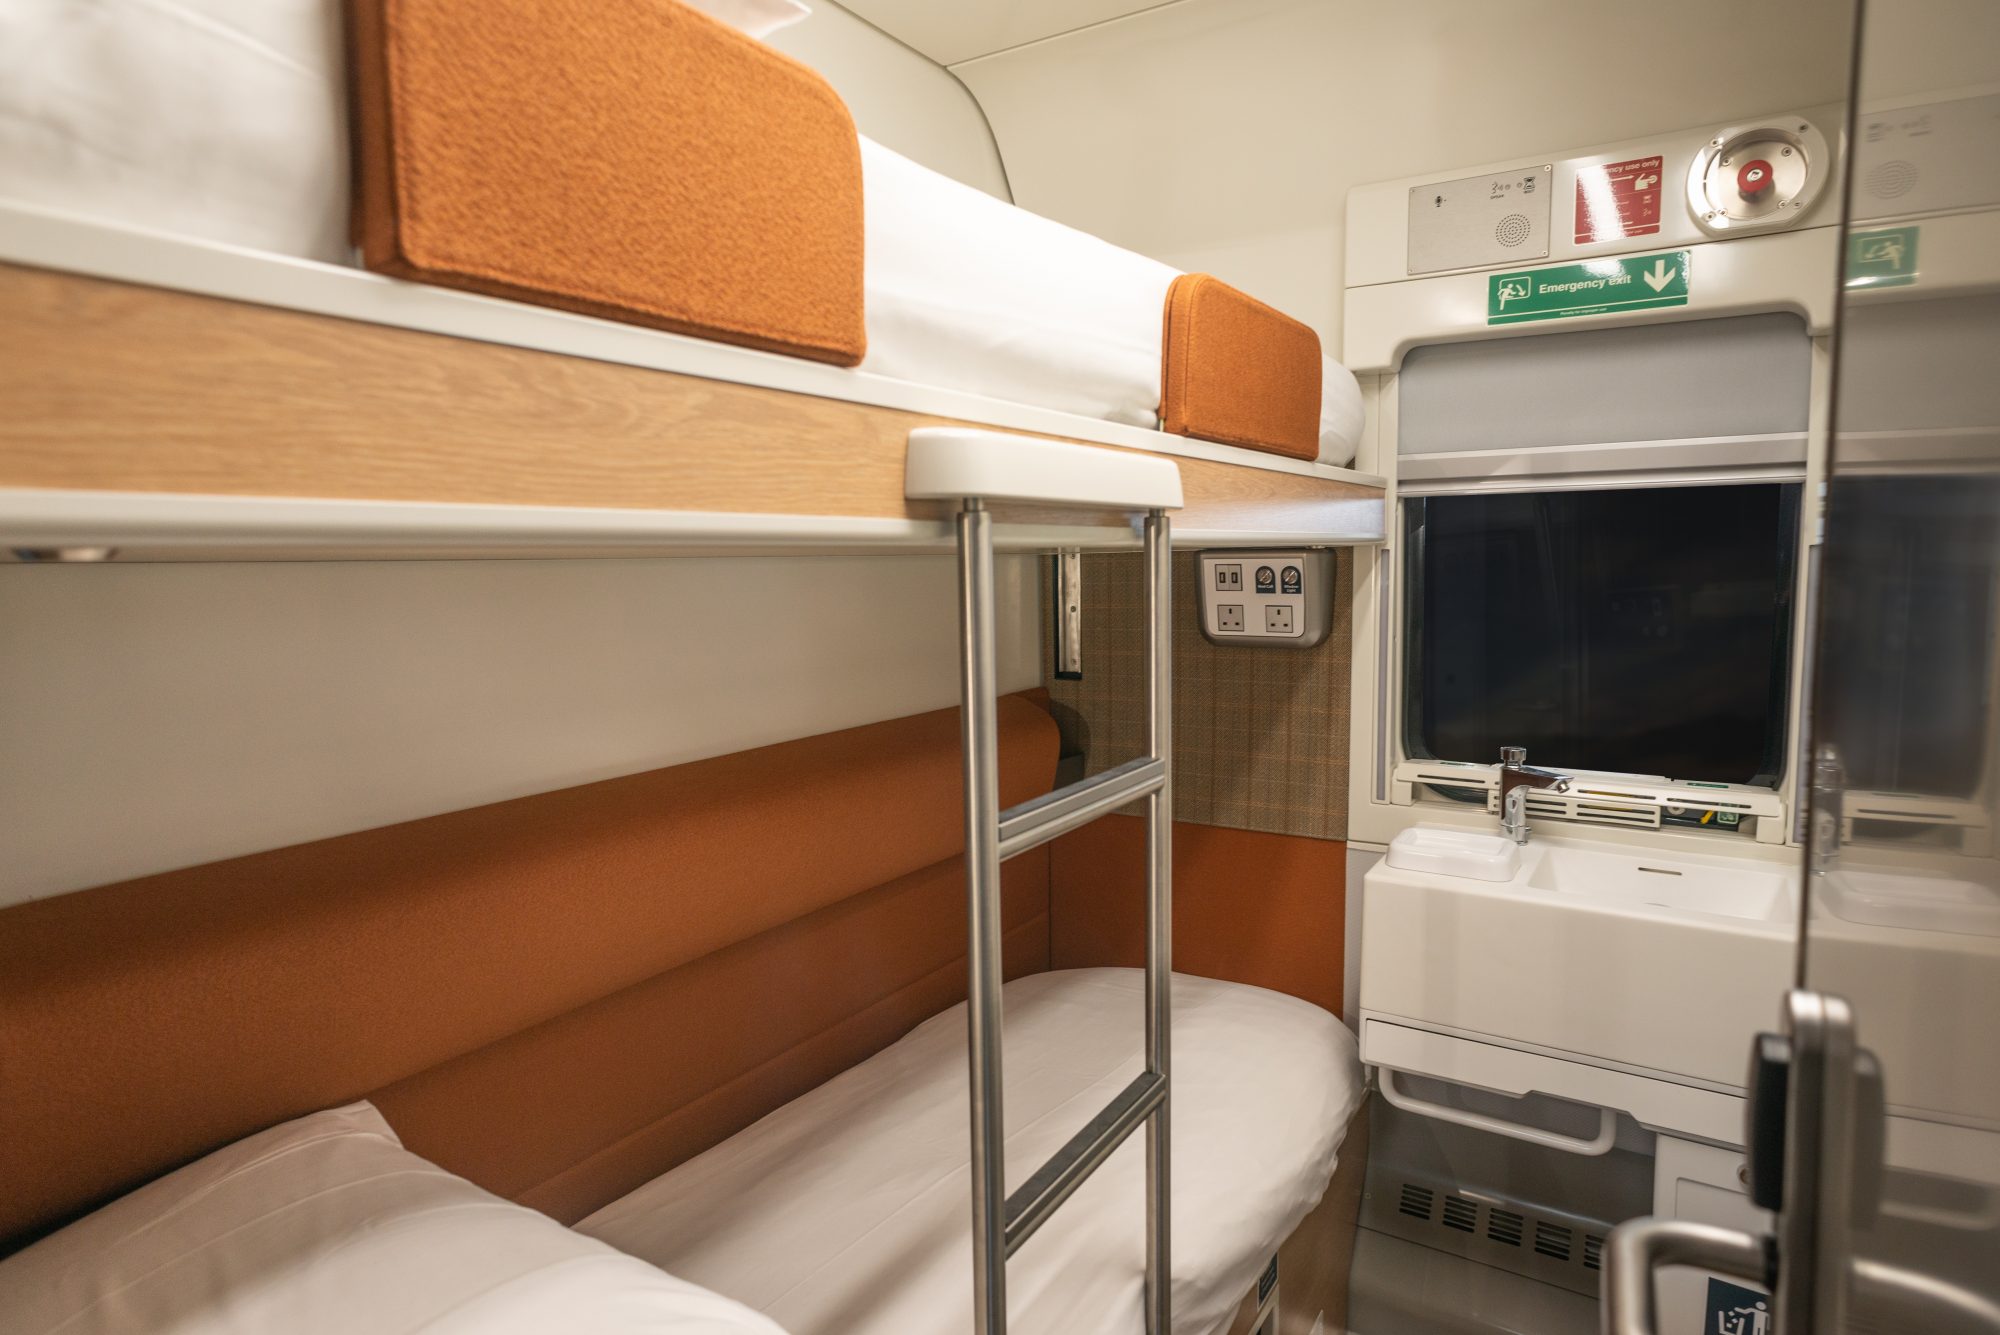 Caledonian Sleeper Accommodation | A Hotel Experience